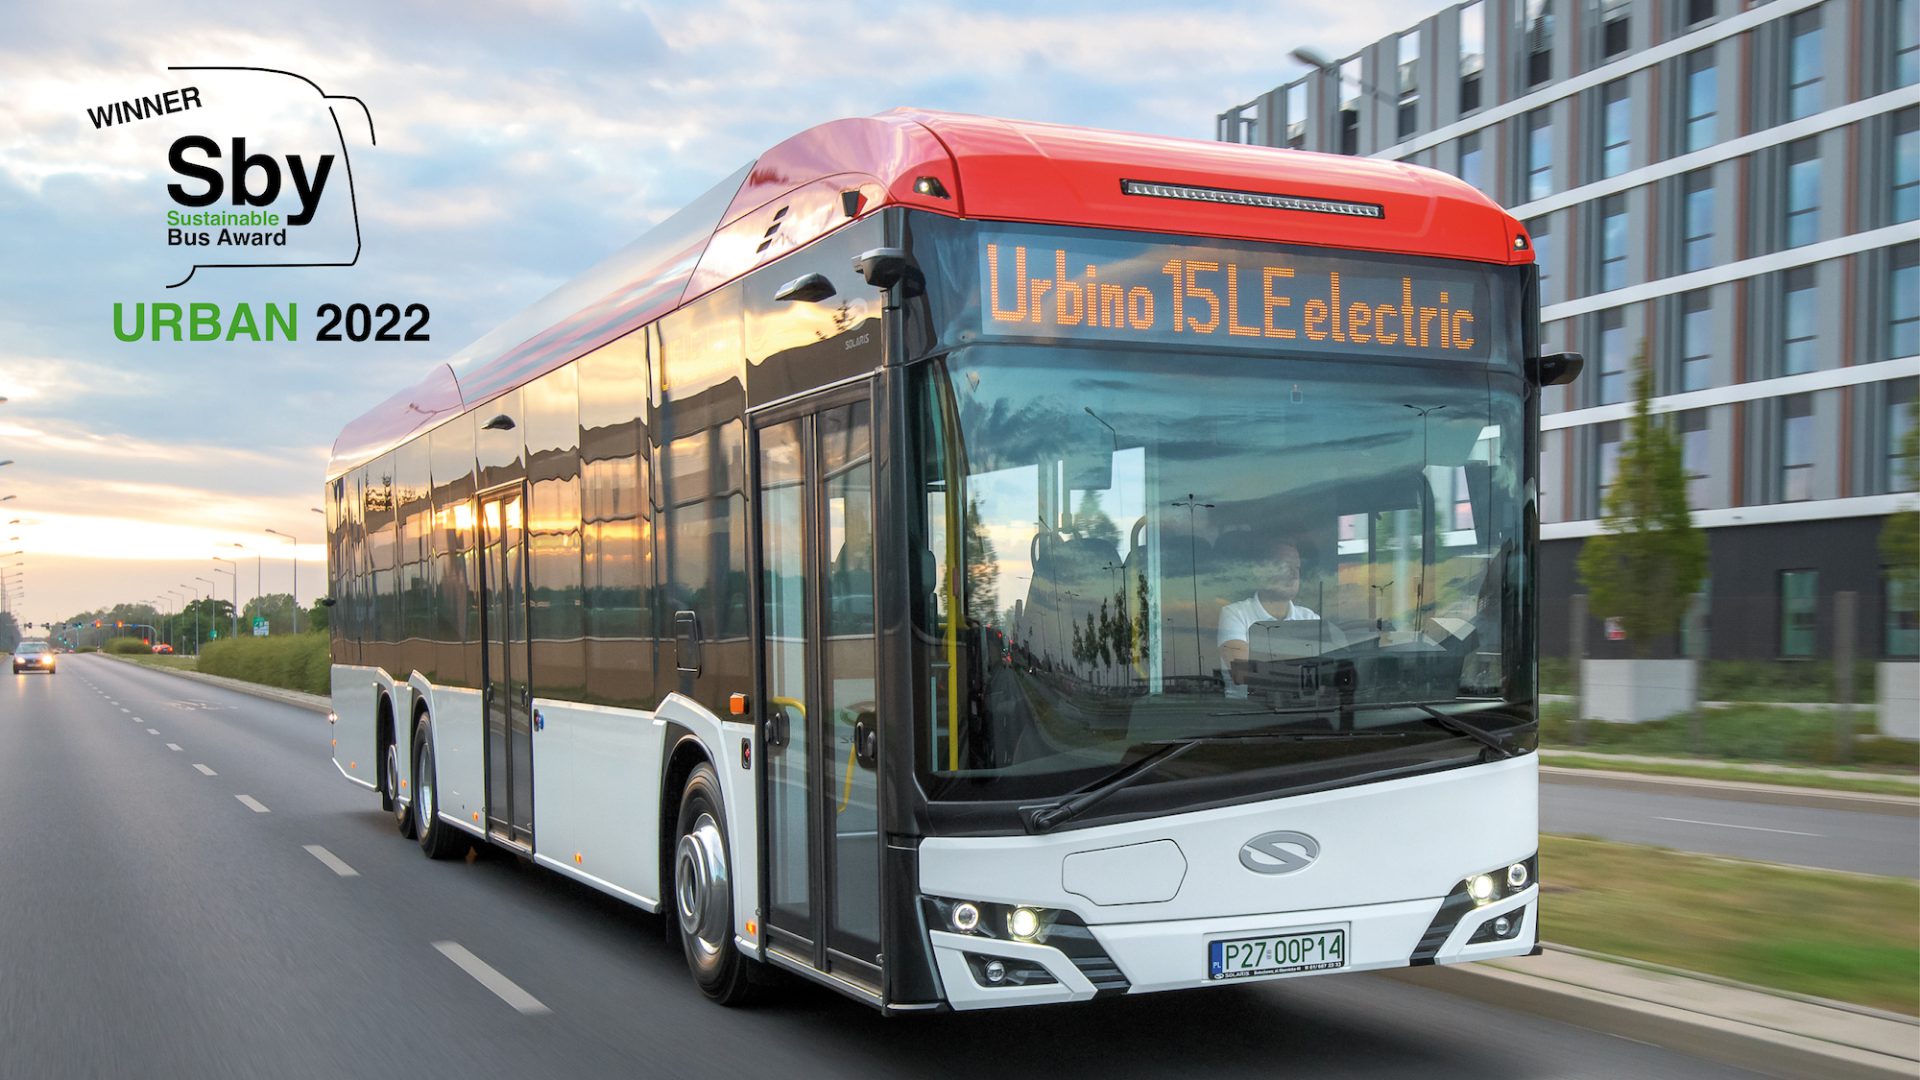 sustainable bus awards 2022